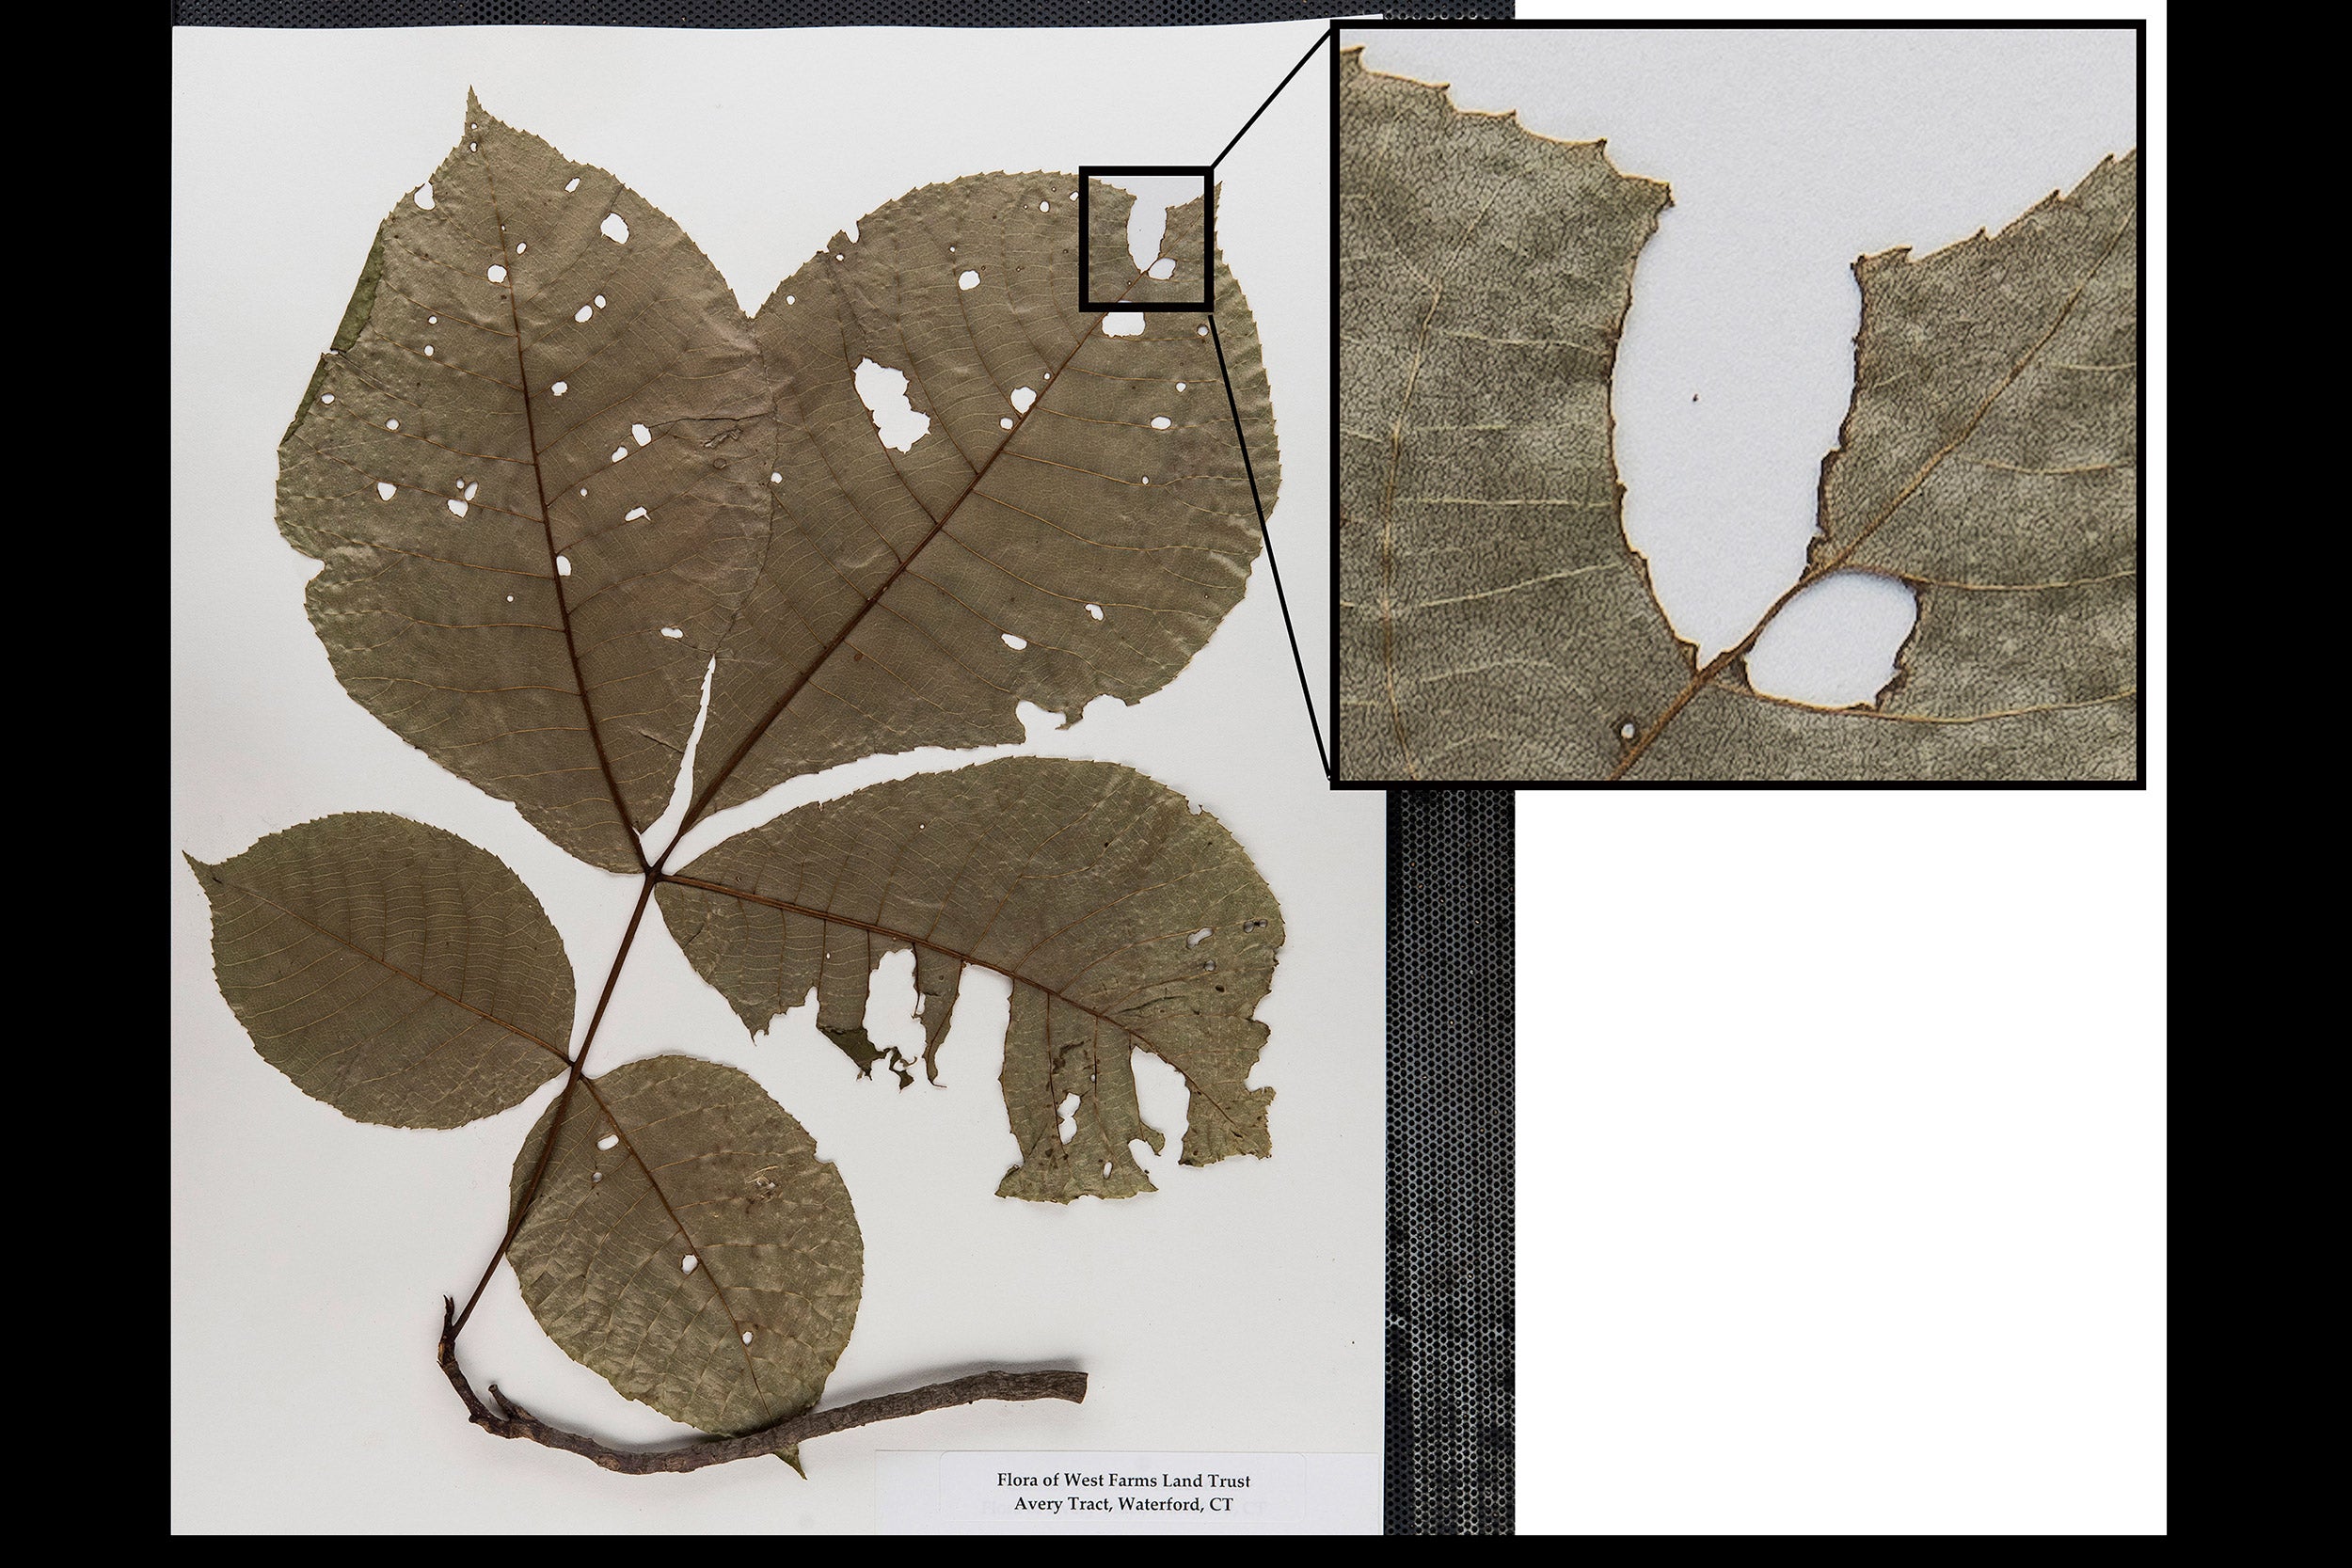 Herbarium specimen with insect damage.